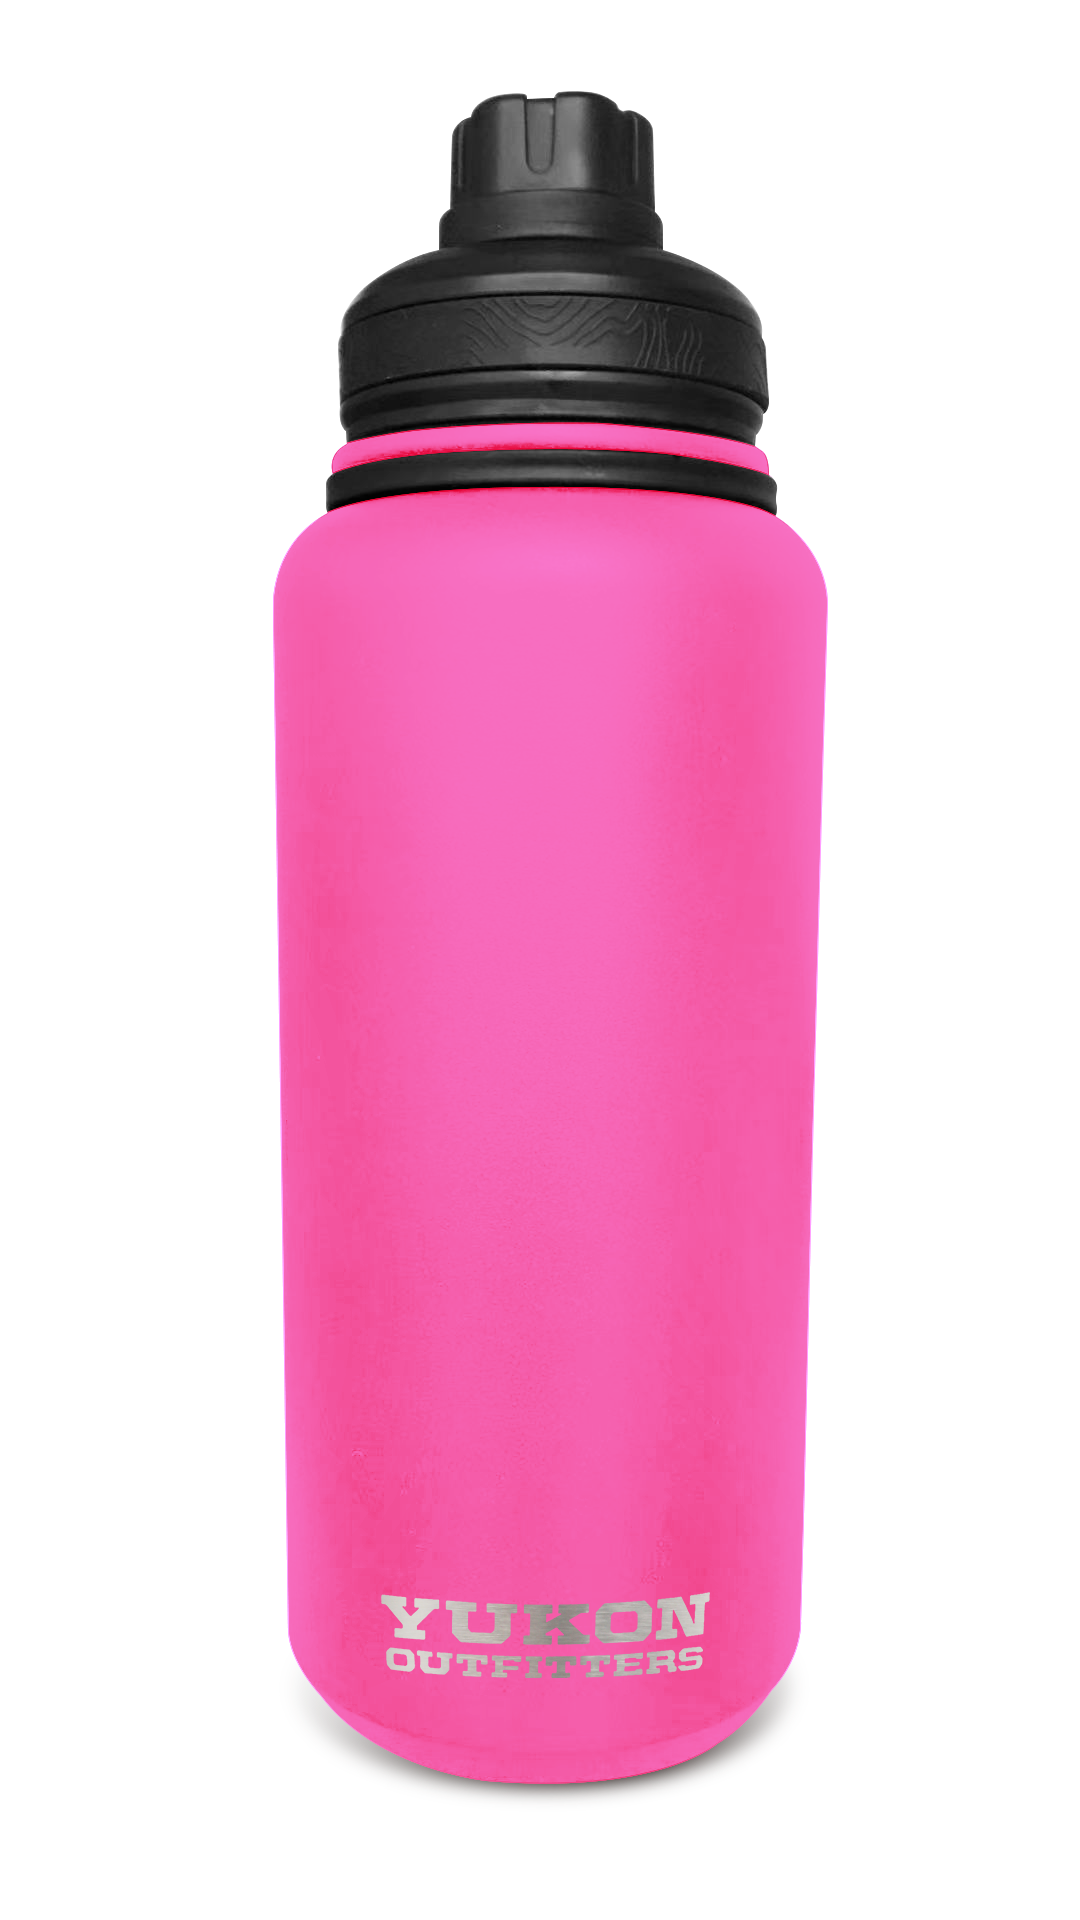 Hydro Peak 32 oz. Water Bottle Pink! /WITH A SCREW LID